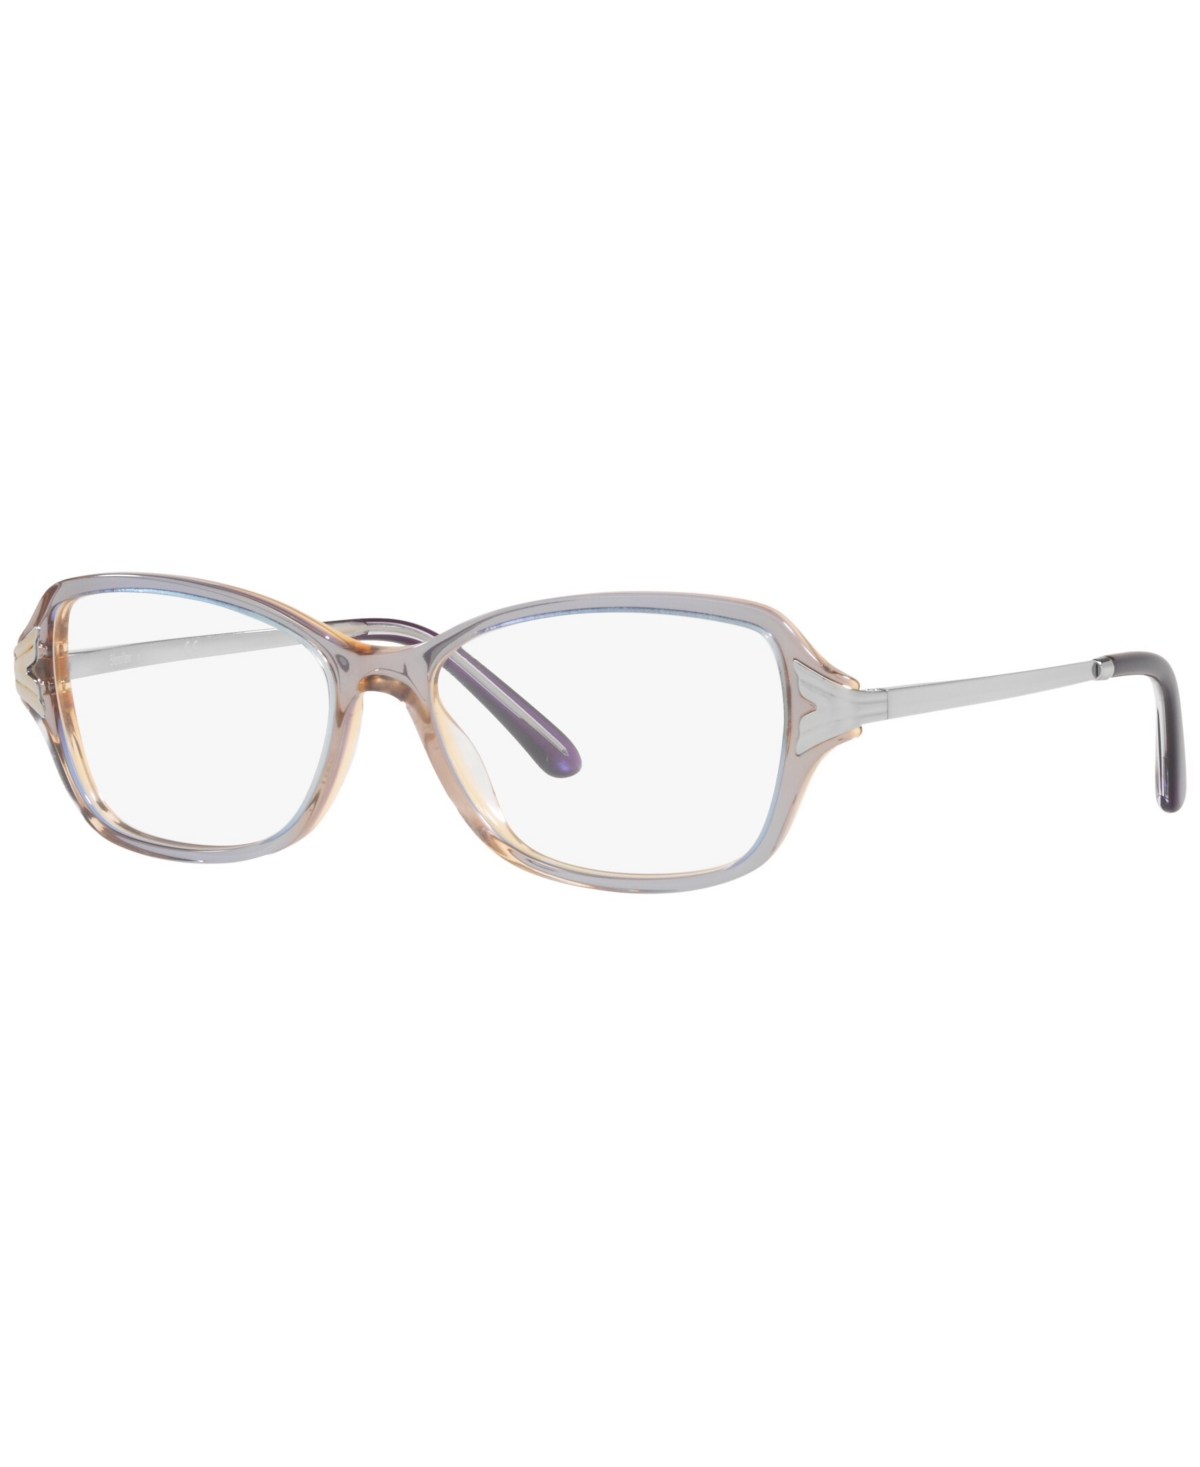 SF1576 Women's Butterfly Eyeglasses - Top Azure on Violet